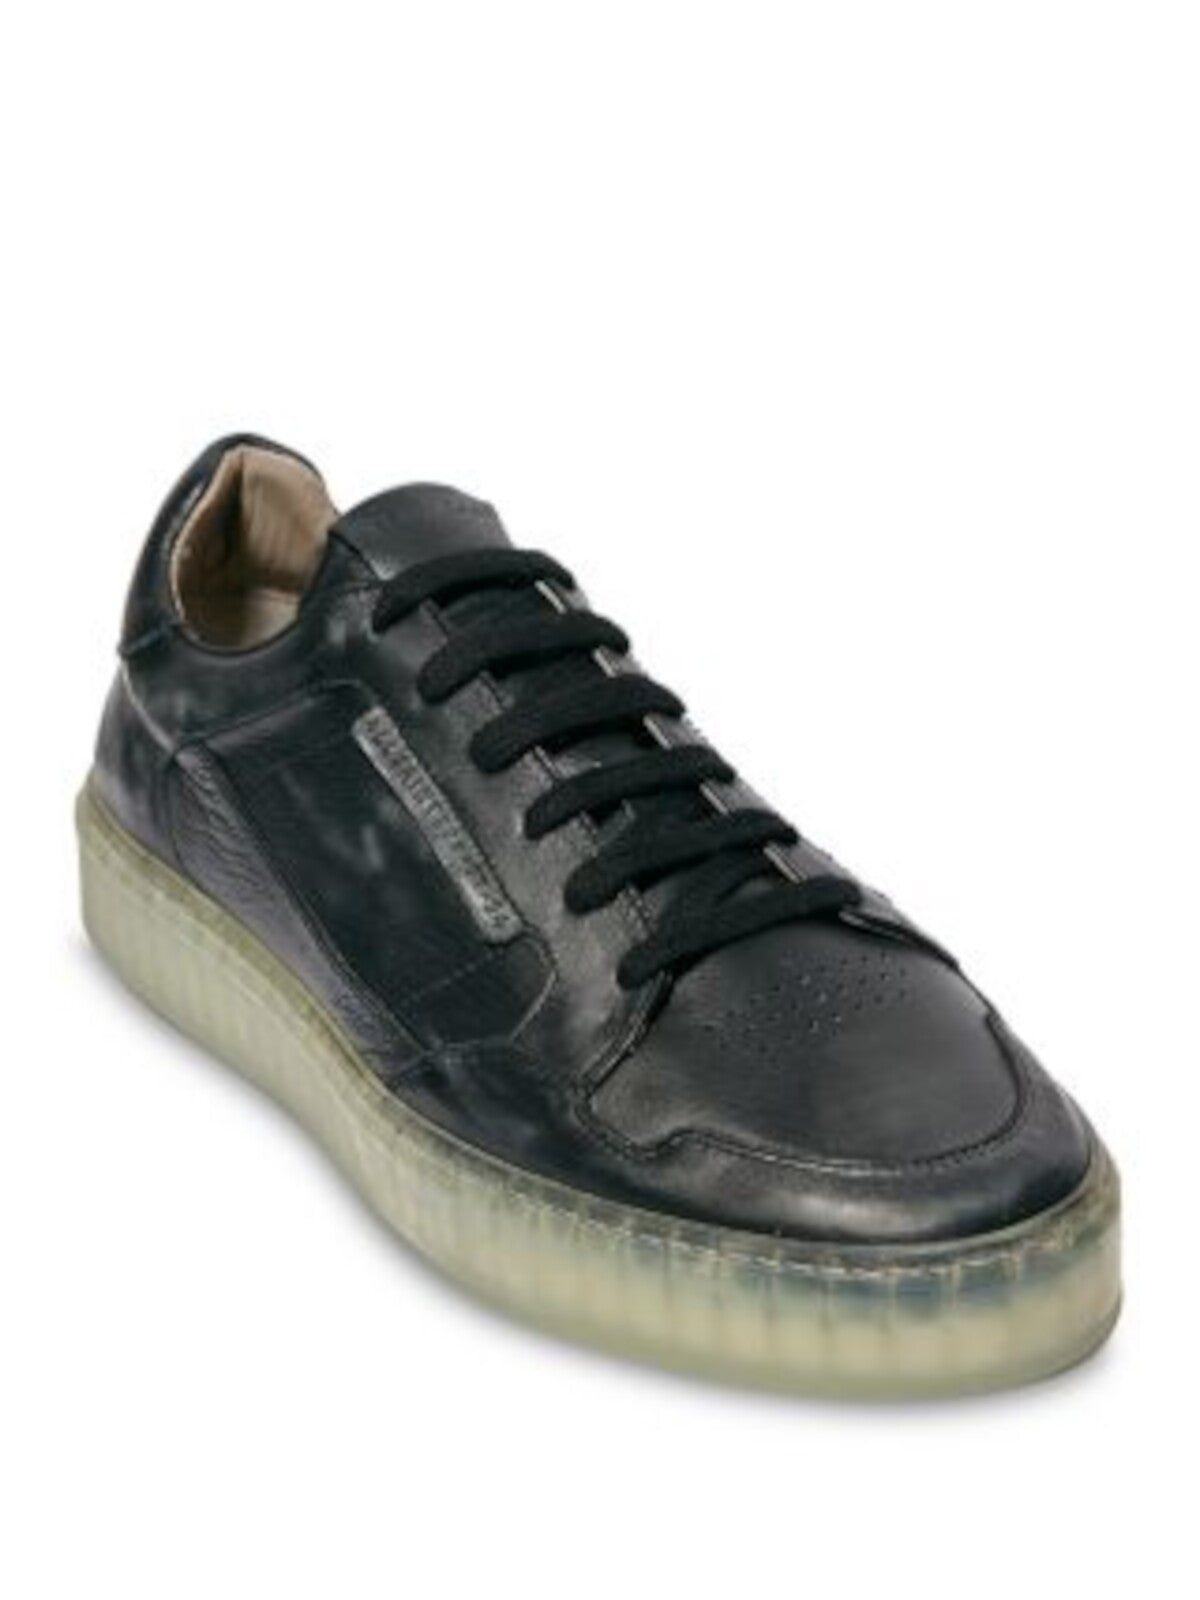 ALLSAINTS Mens Black Distressed Comfort Alton Round Toe Platform Lace-Up Leather Athletic Sneakers Shoes 45